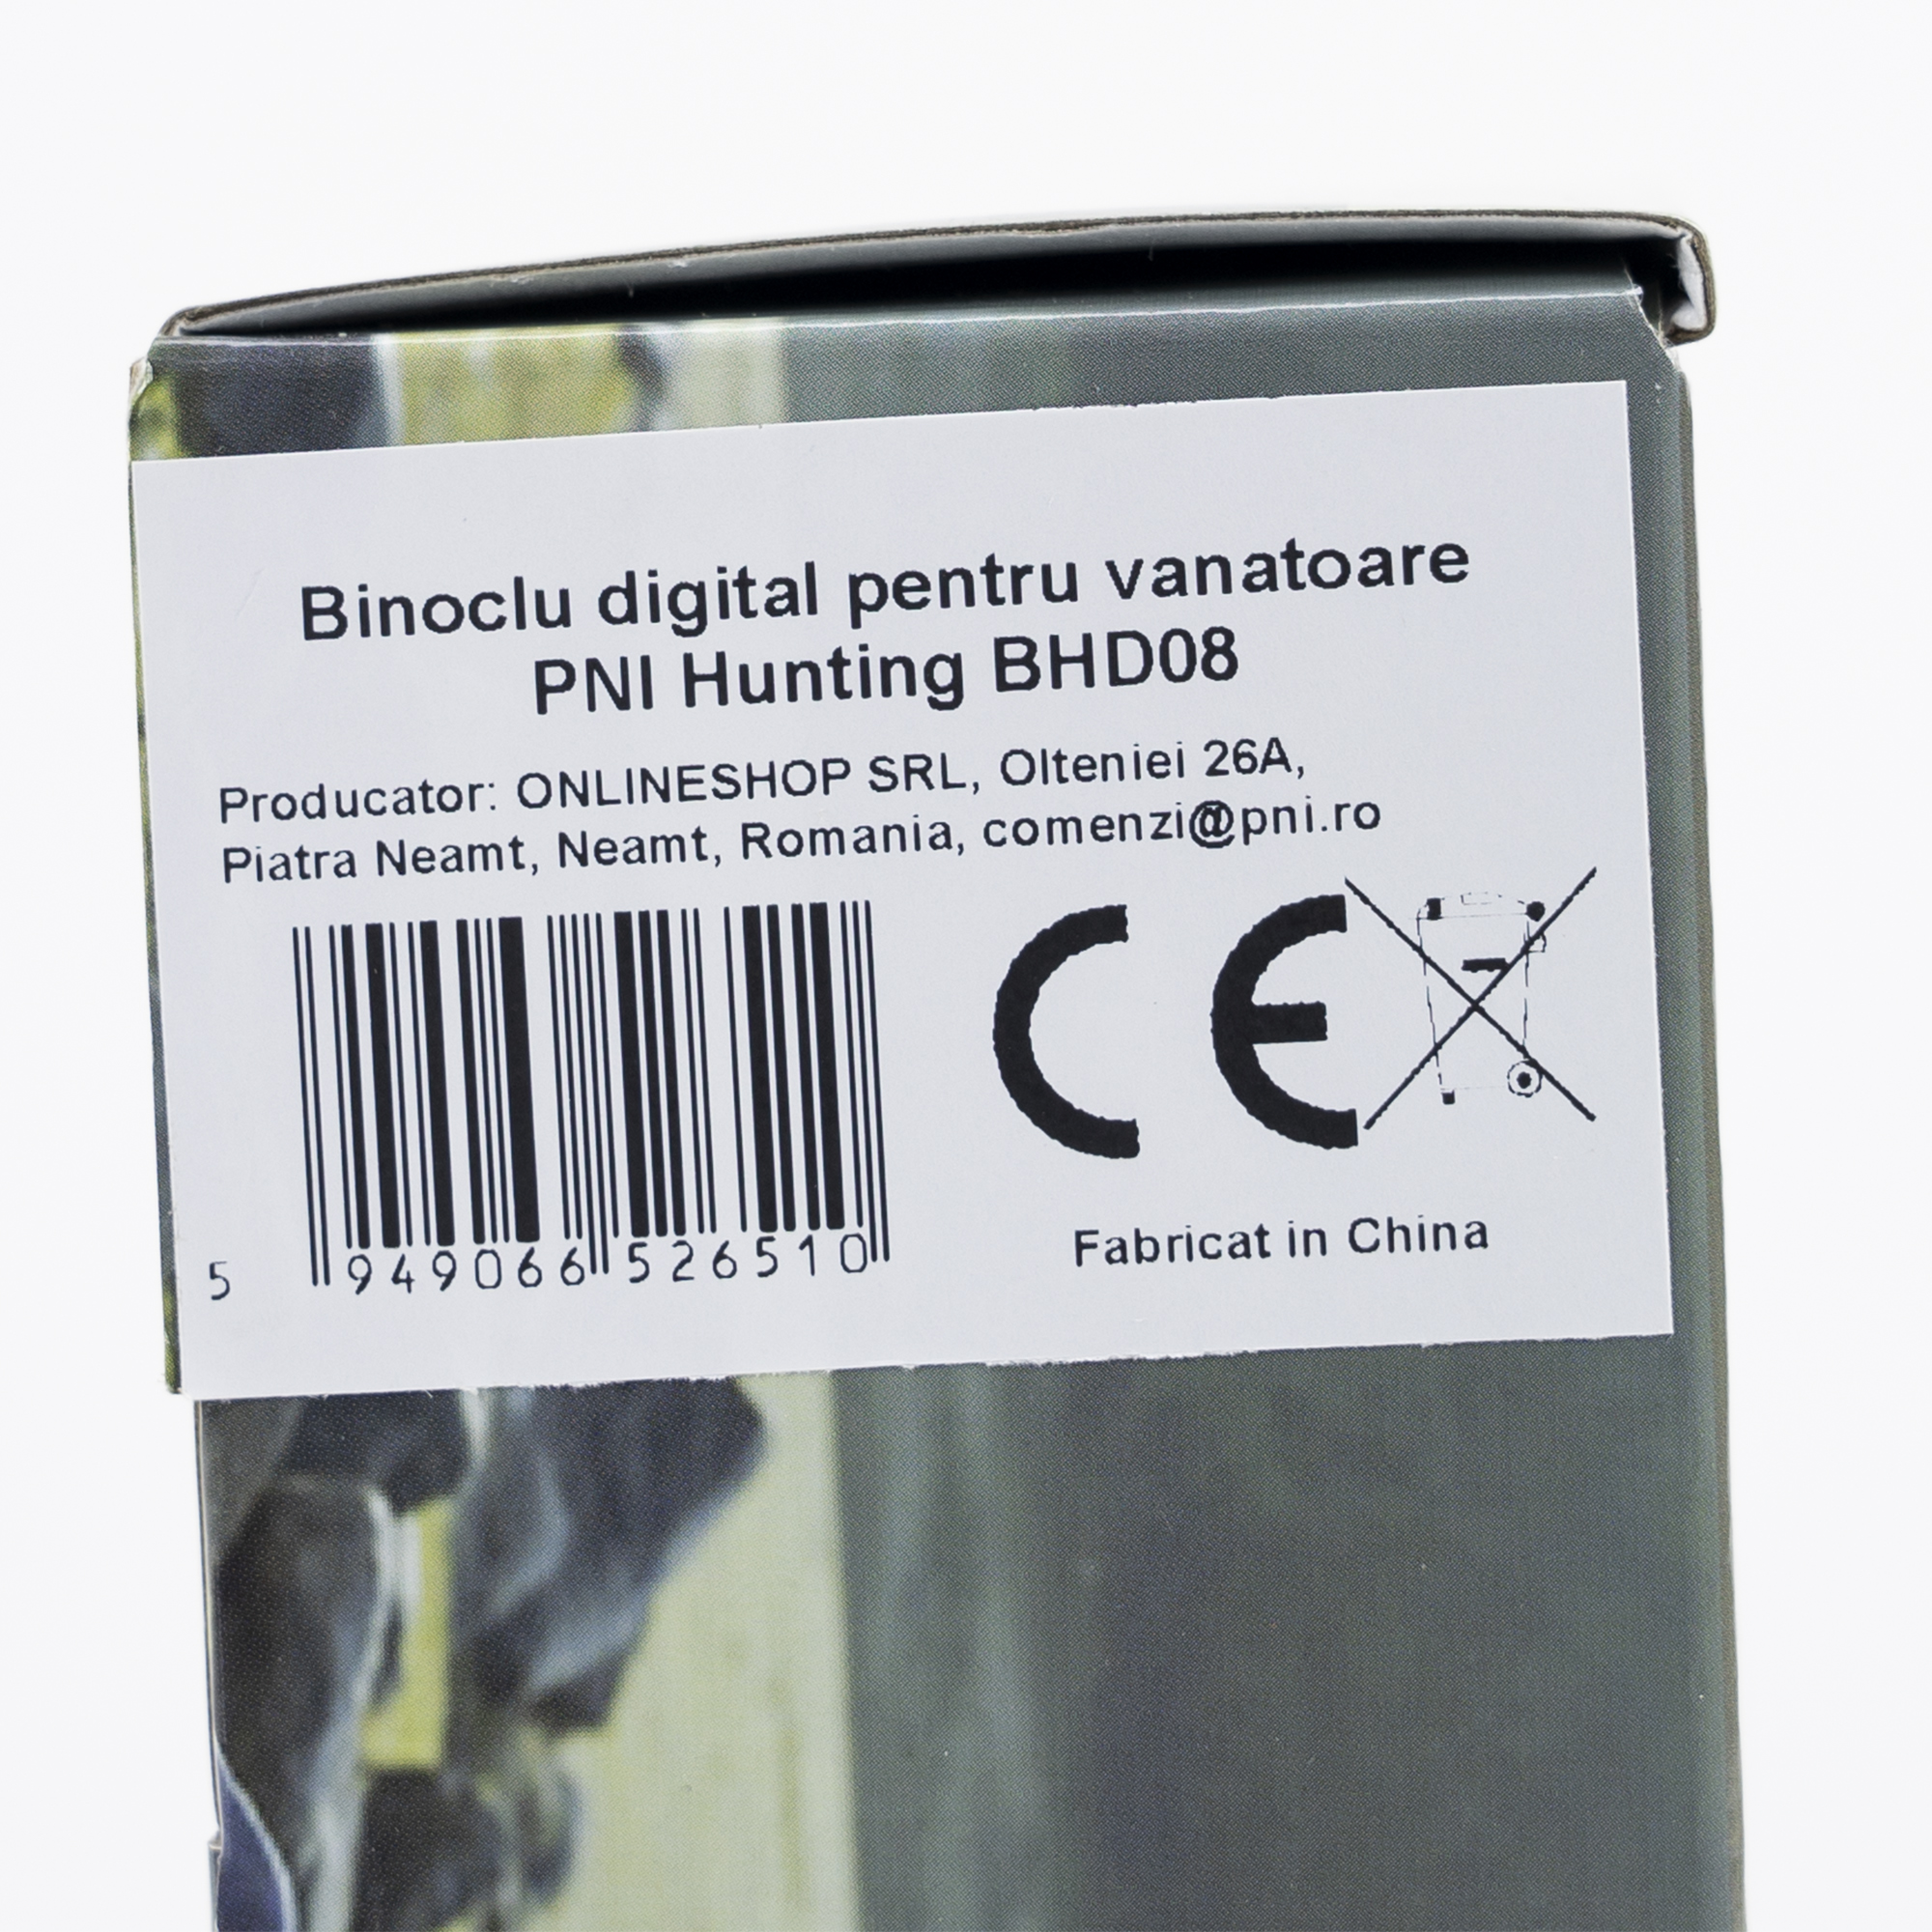 Binoclu digital pentru vanatoare PNI Hunting BHD08 image13